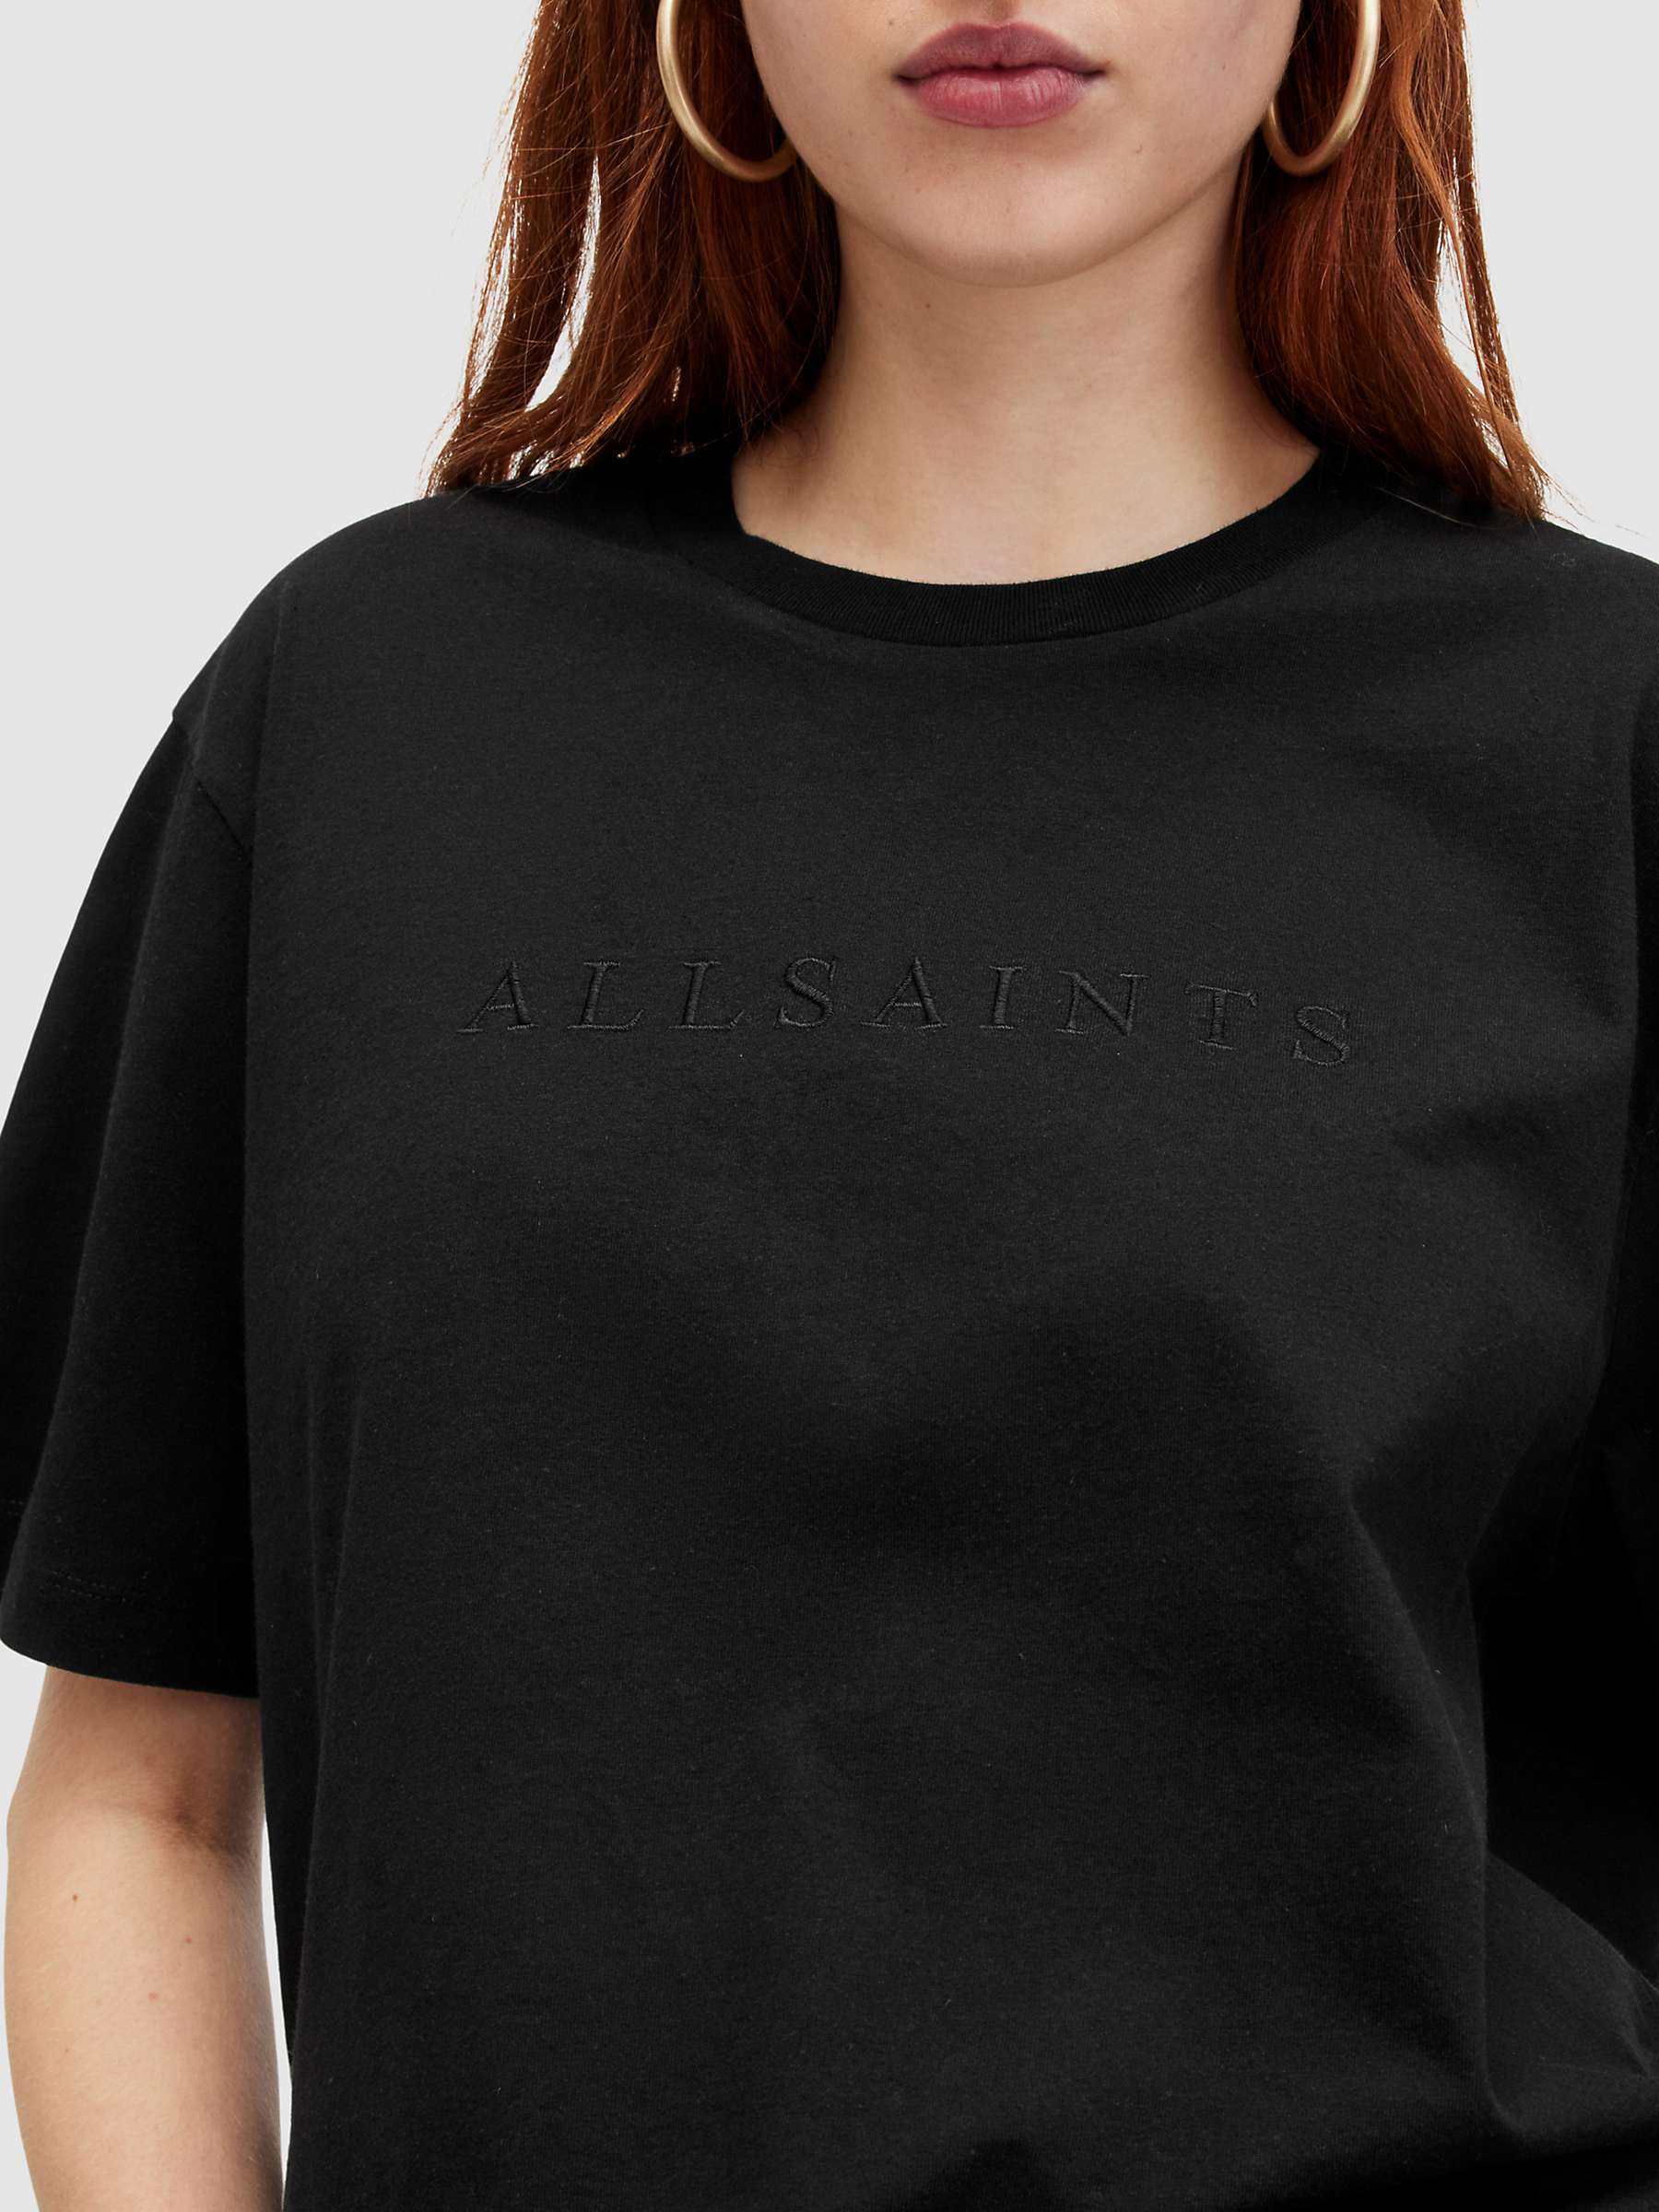 Buy AllSaints Pippa Boyfriend Fit T-Shirt Online at johnlewis.com